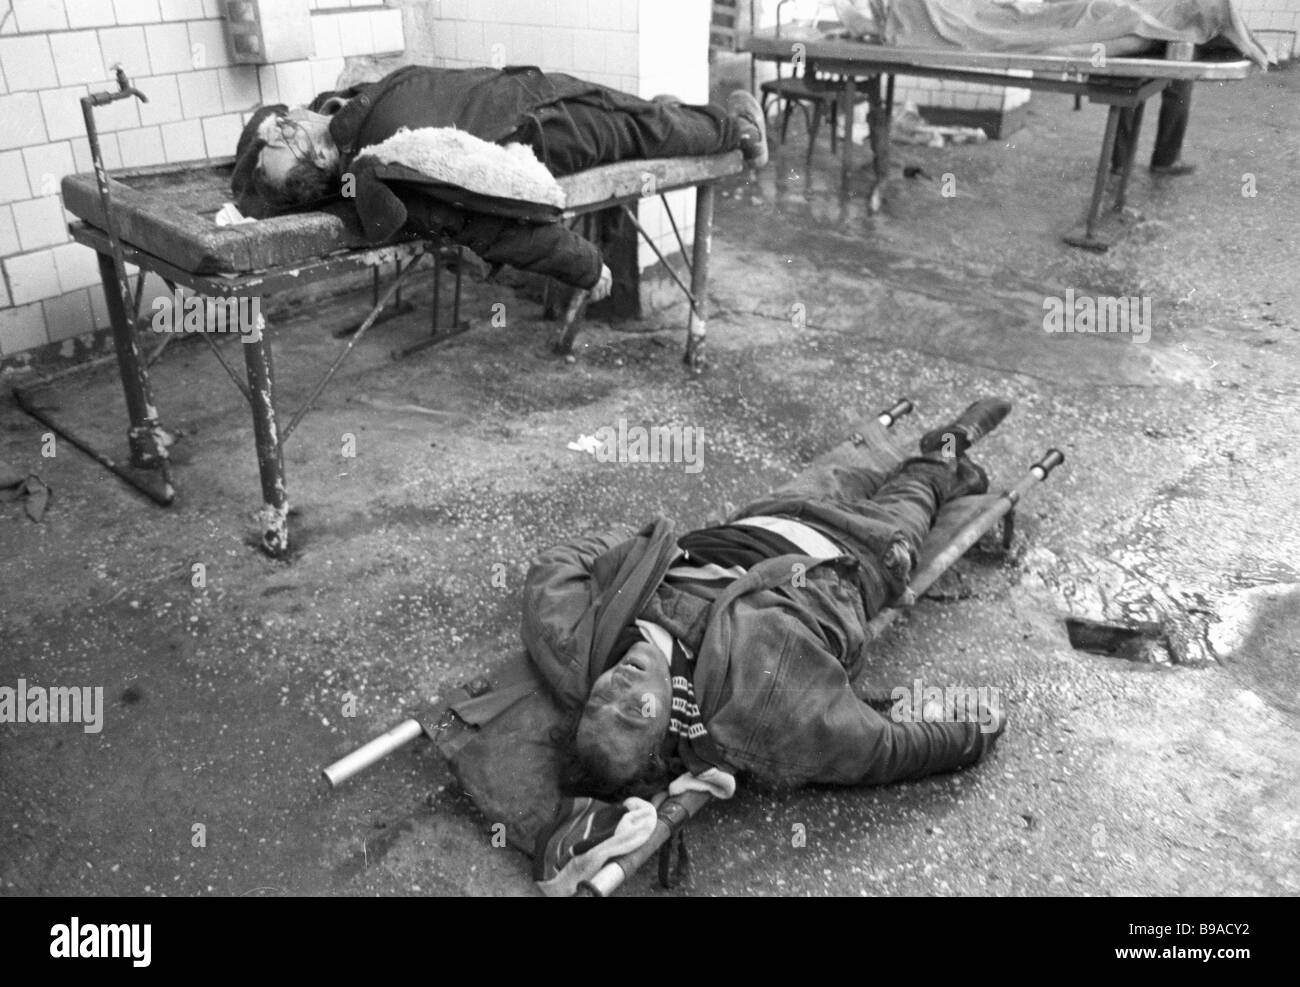 Morts victimes des conflits armés dans la région de Tbilissi, dans la morgue de l'hôpital No 1 de la ville Banque D'Images